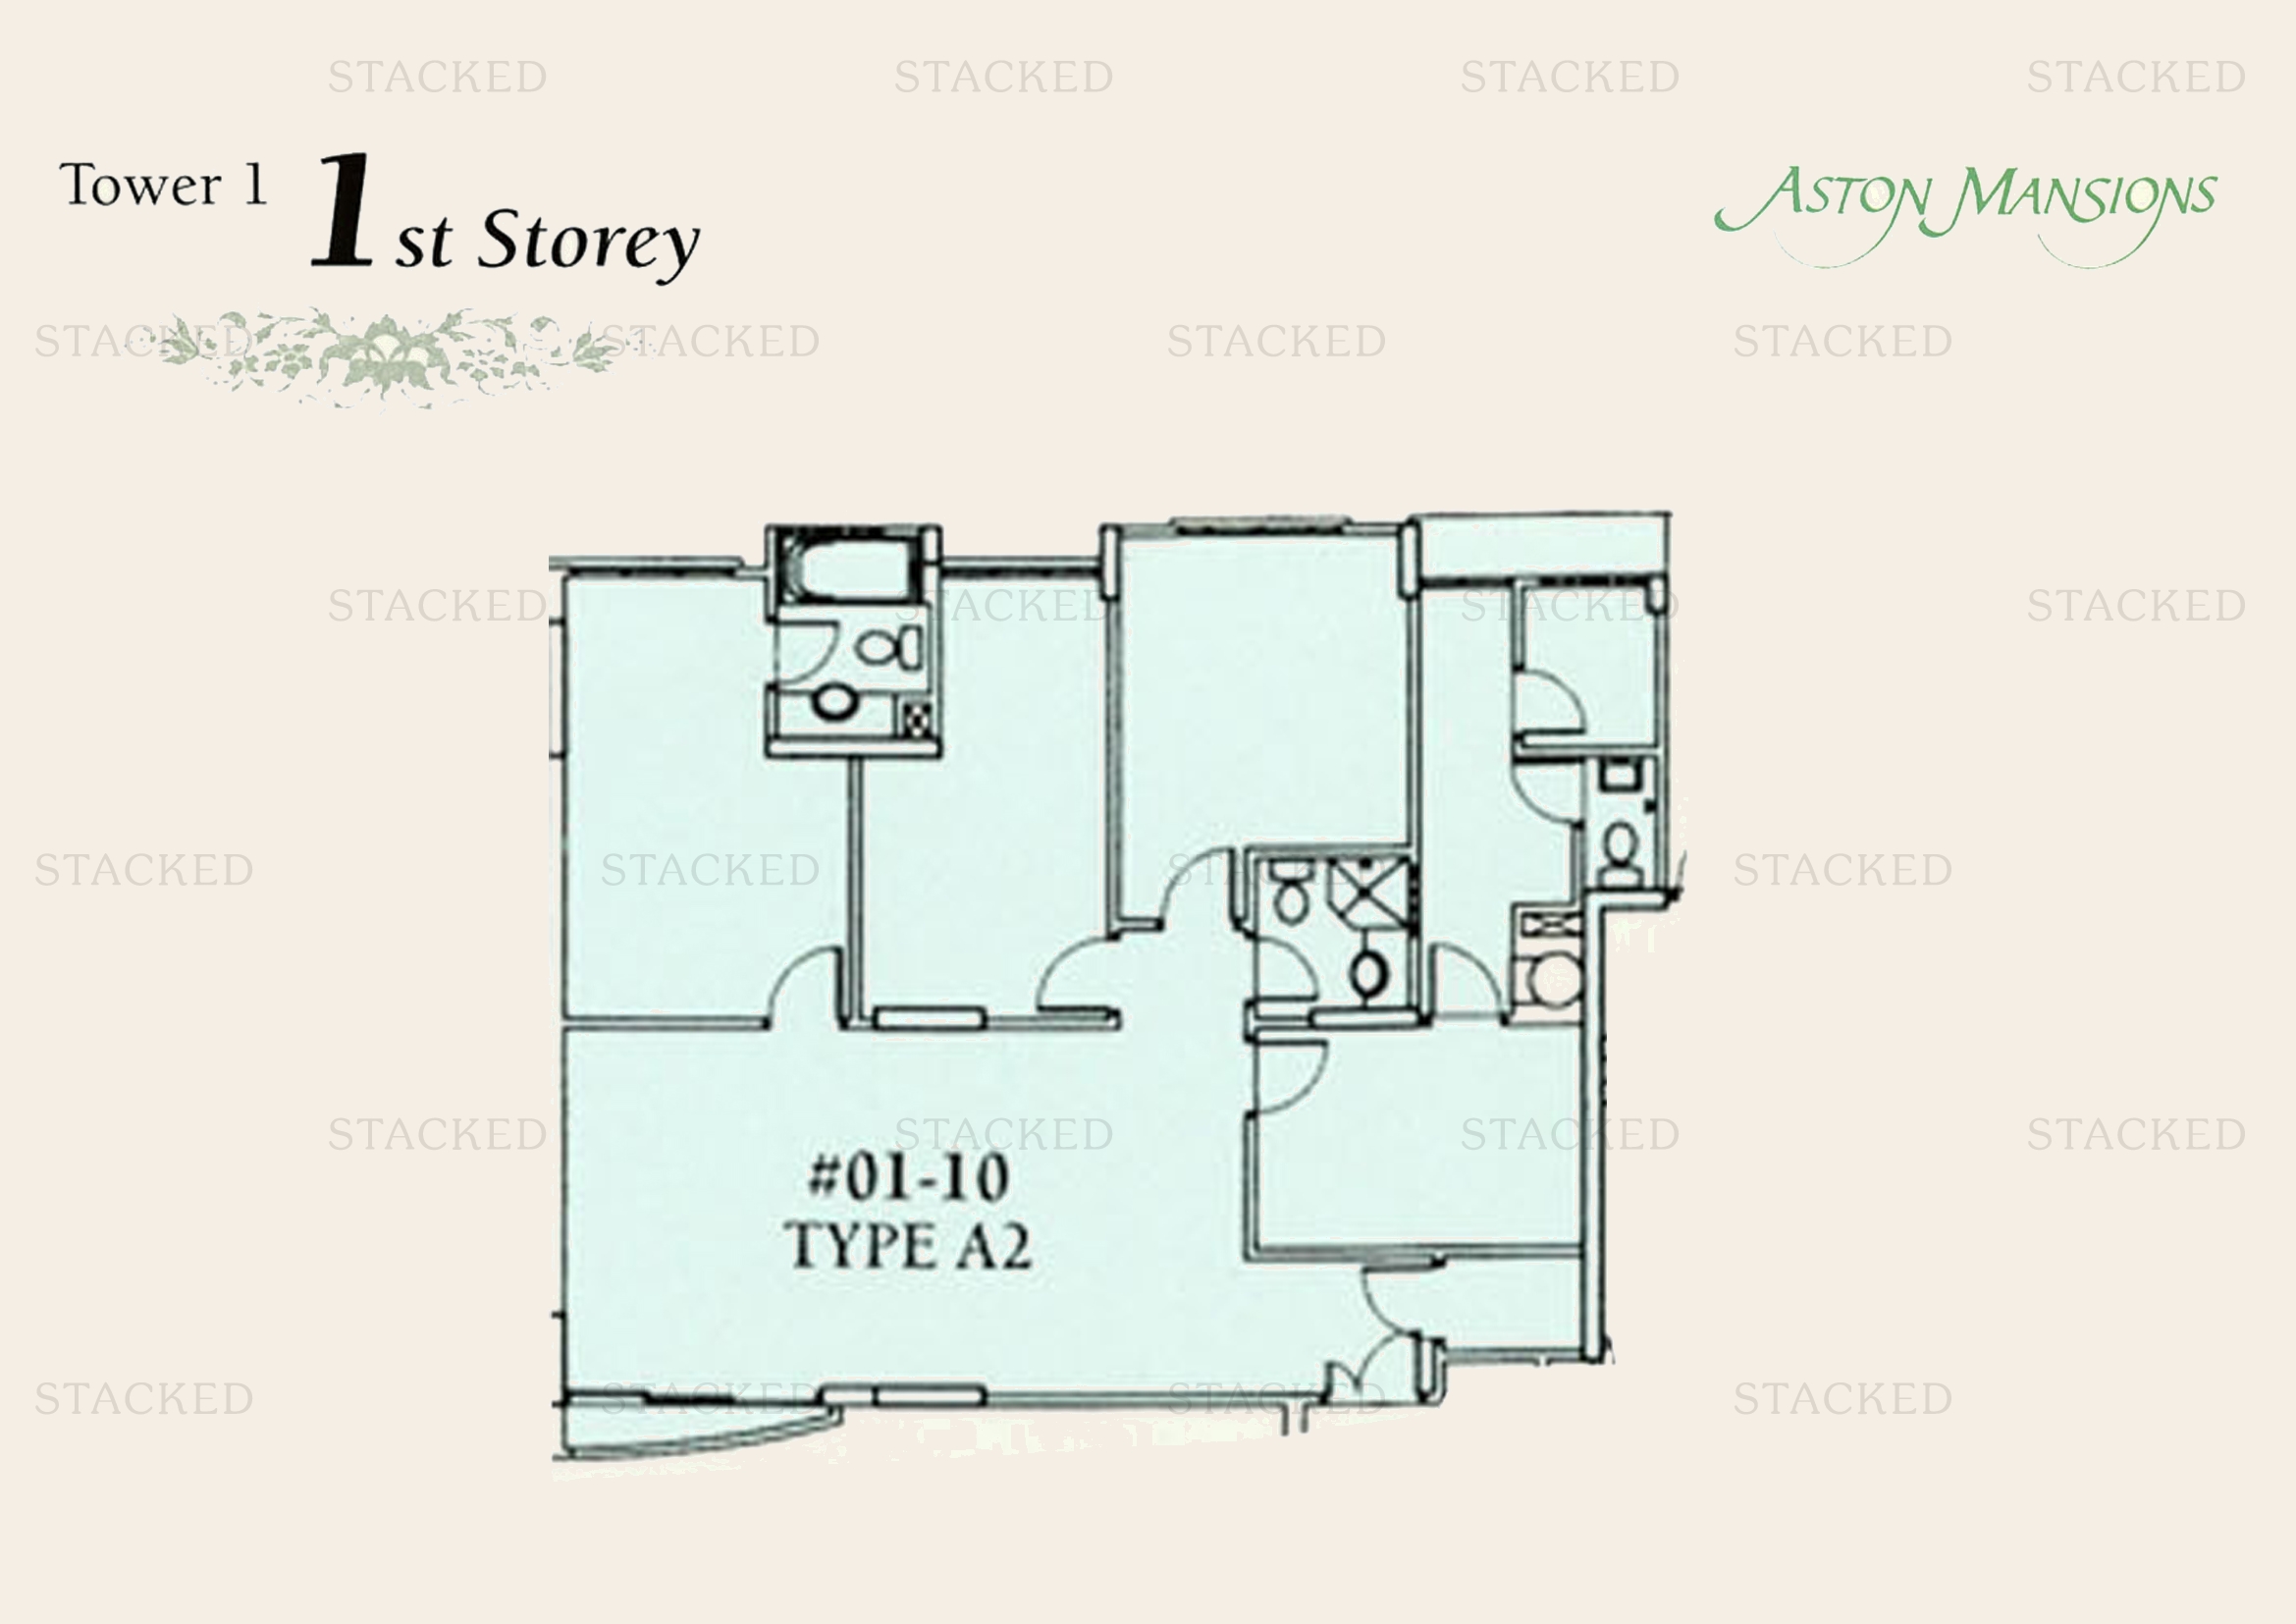 Aston Mansions floor plan